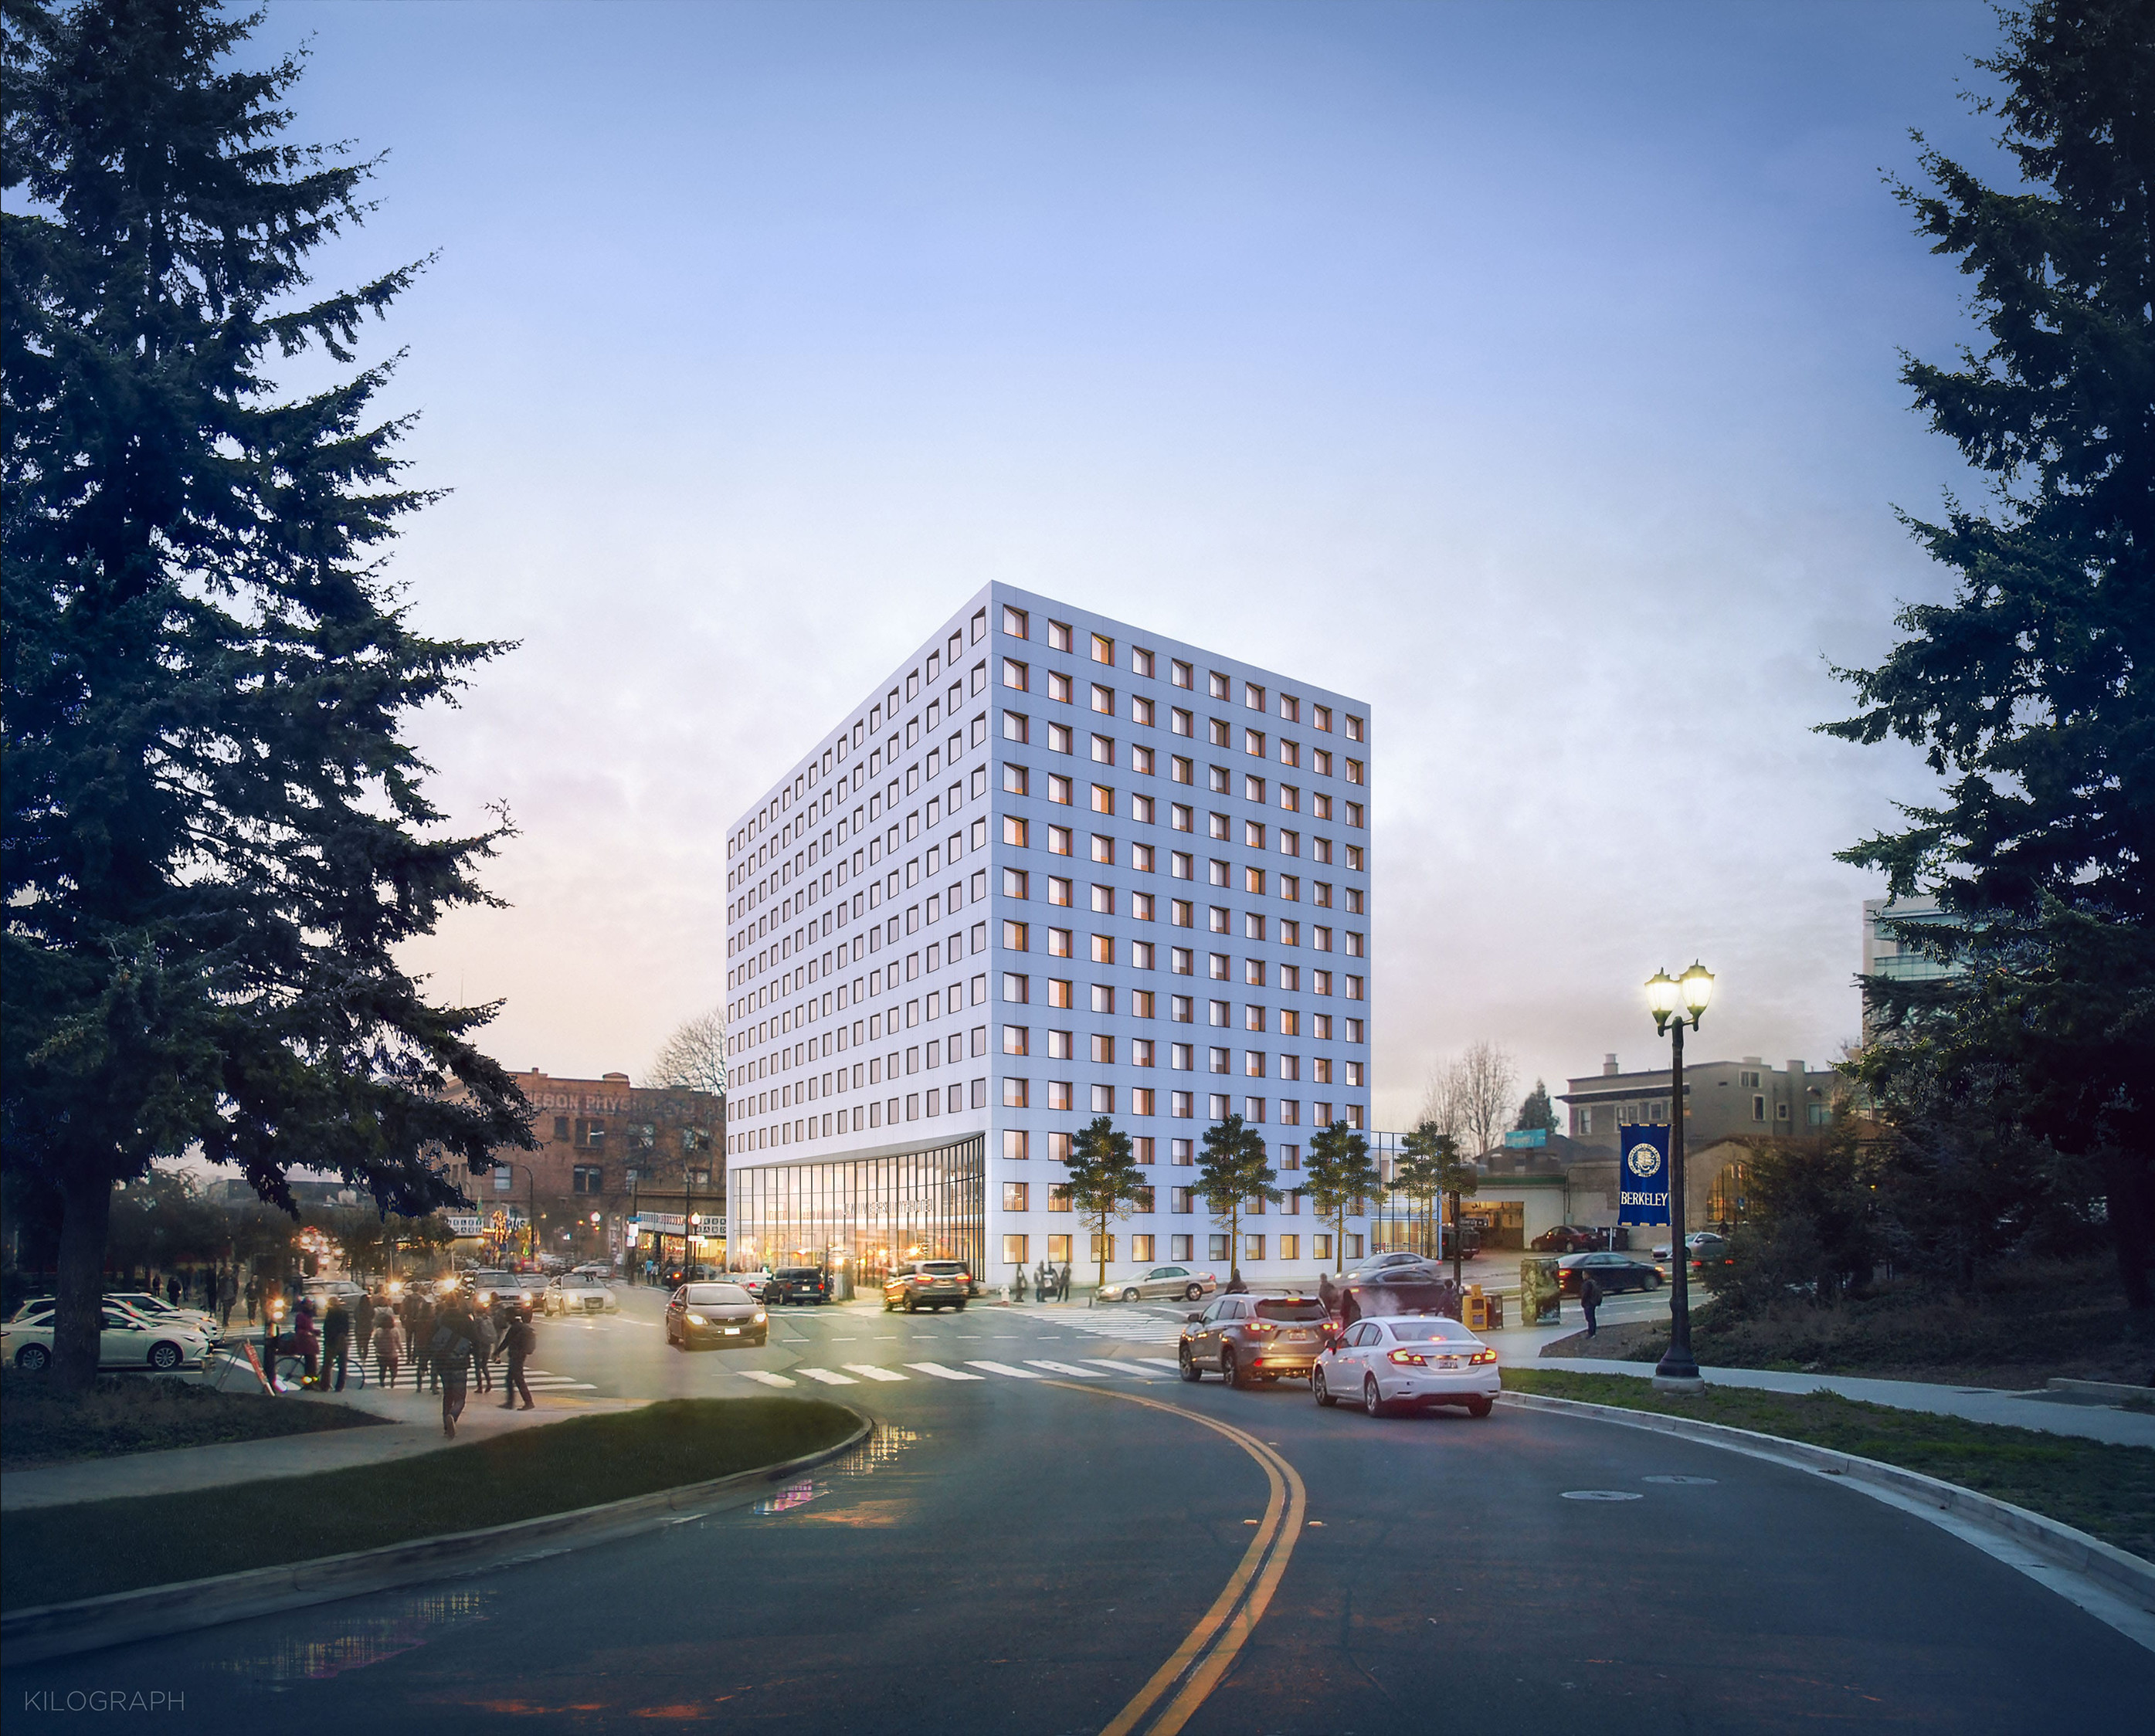 Berkeley Hotel Station, University of California Berkeley, Saitowitz Natoma Architects, Kilograph